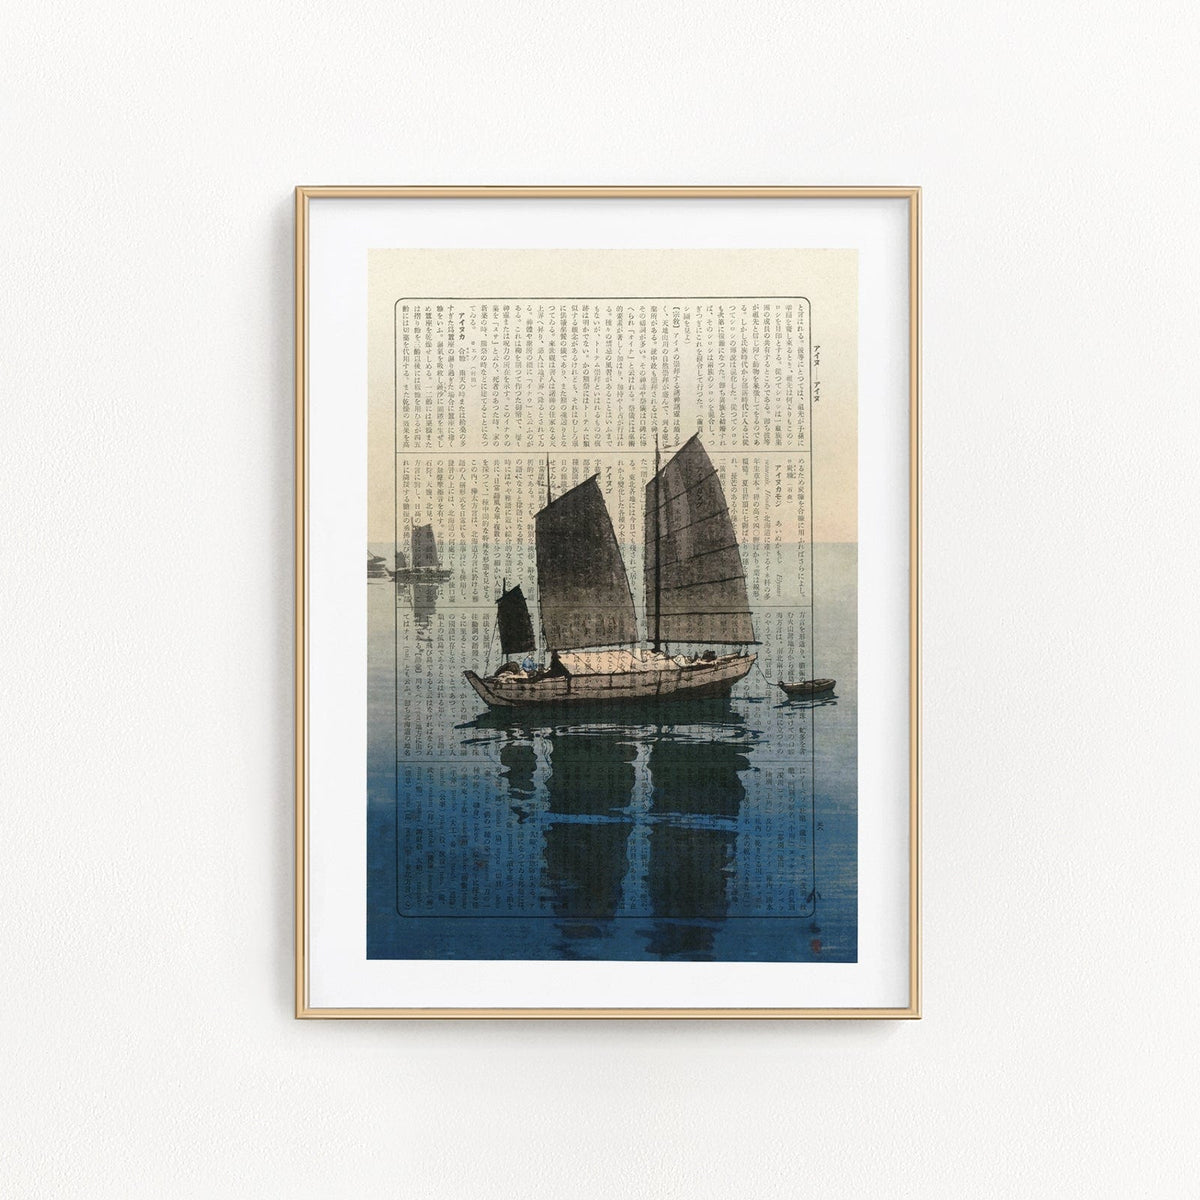 Sailing Boats Forenoon - Hiroshi Yoshida - Book Page Art Print - Japanese Art Print - Art on Words